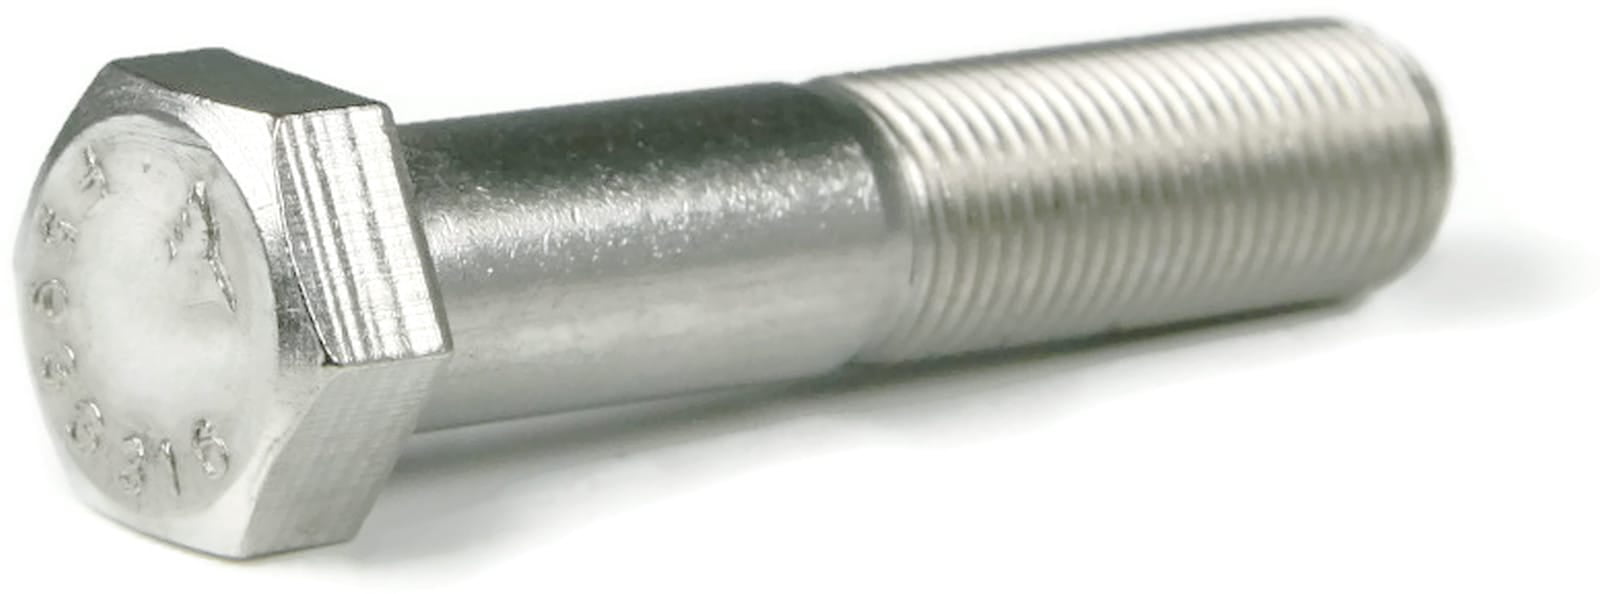 3/4-10 x Hex Cap Screws, 316 Stainless Steel (Quantity: 30) Coarse Thread  (UNC) Partially Threaded